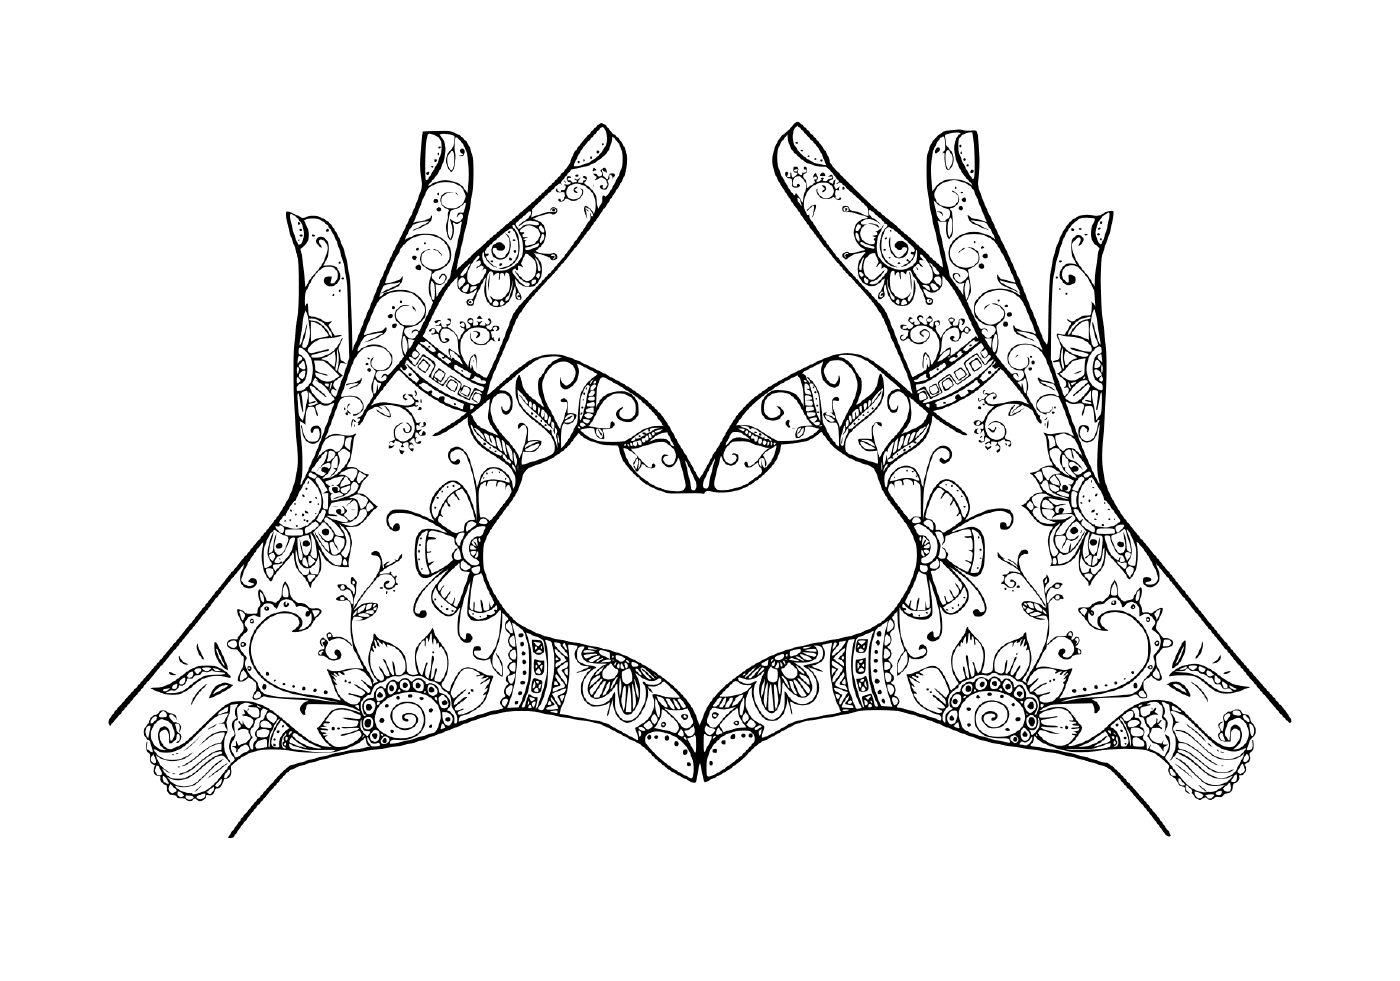  Heart-shaped zentangle hands 